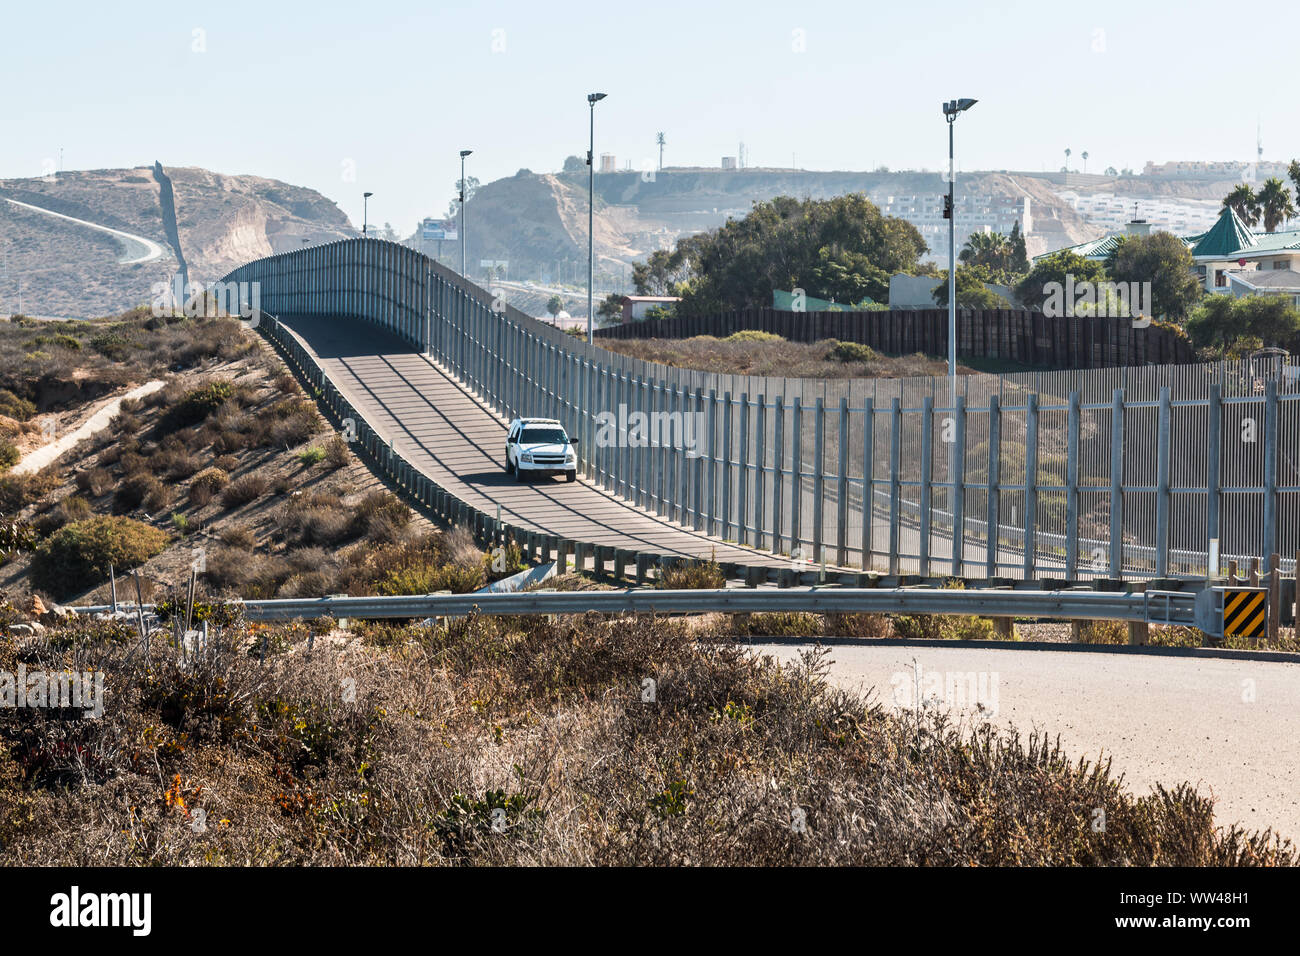 San Diego, California and Tijuana, Mexico international border wall with border patrol vehicle. Stock Photo